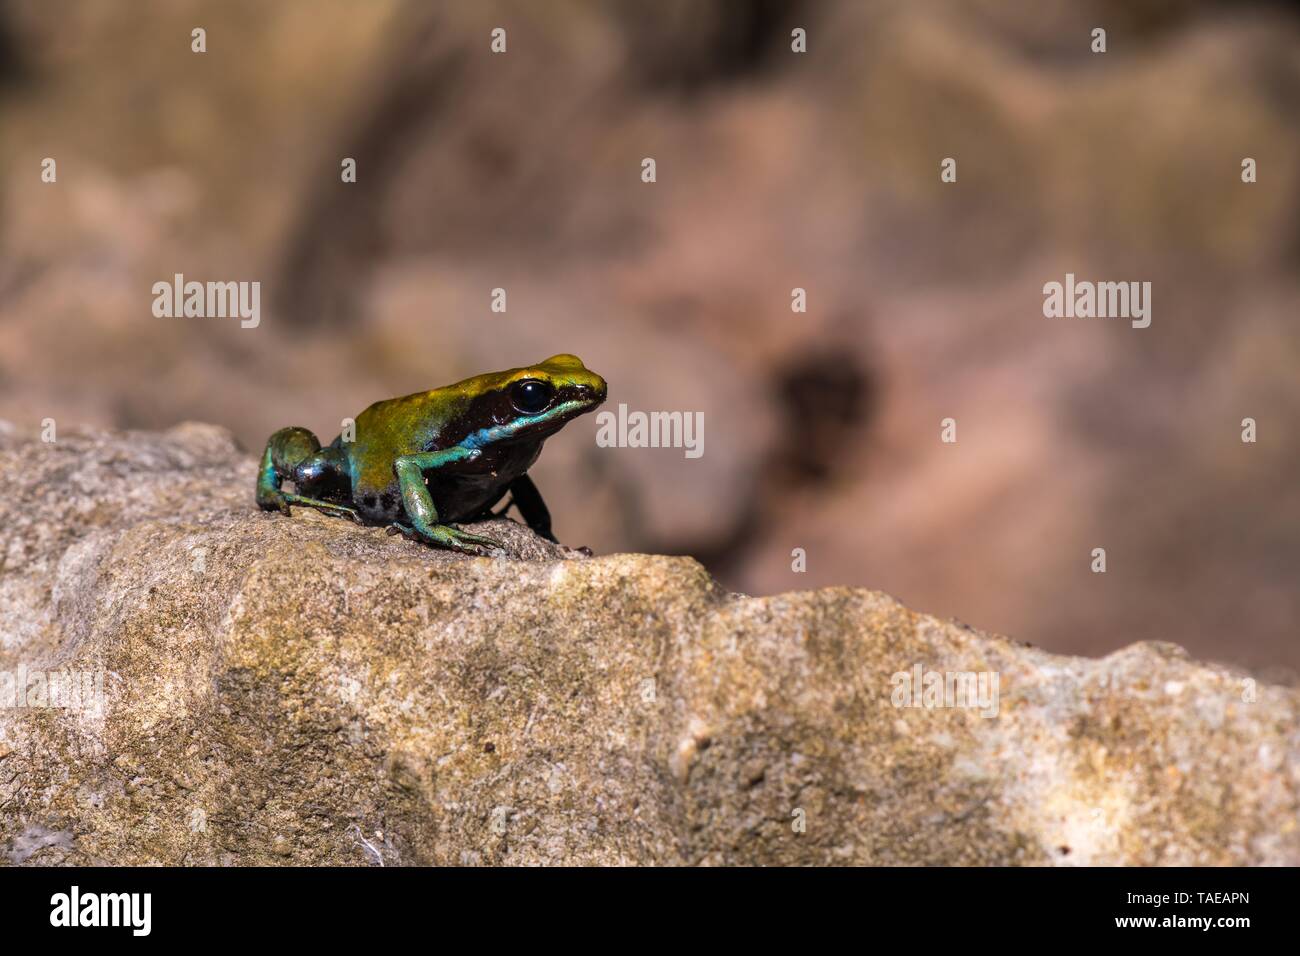 Coton vert Madagascar (grenouille Mantella viridis) est assise sur la pierre, Nosy Hara National Park, au nord de Madagascar, Madagascar Banque D'Images